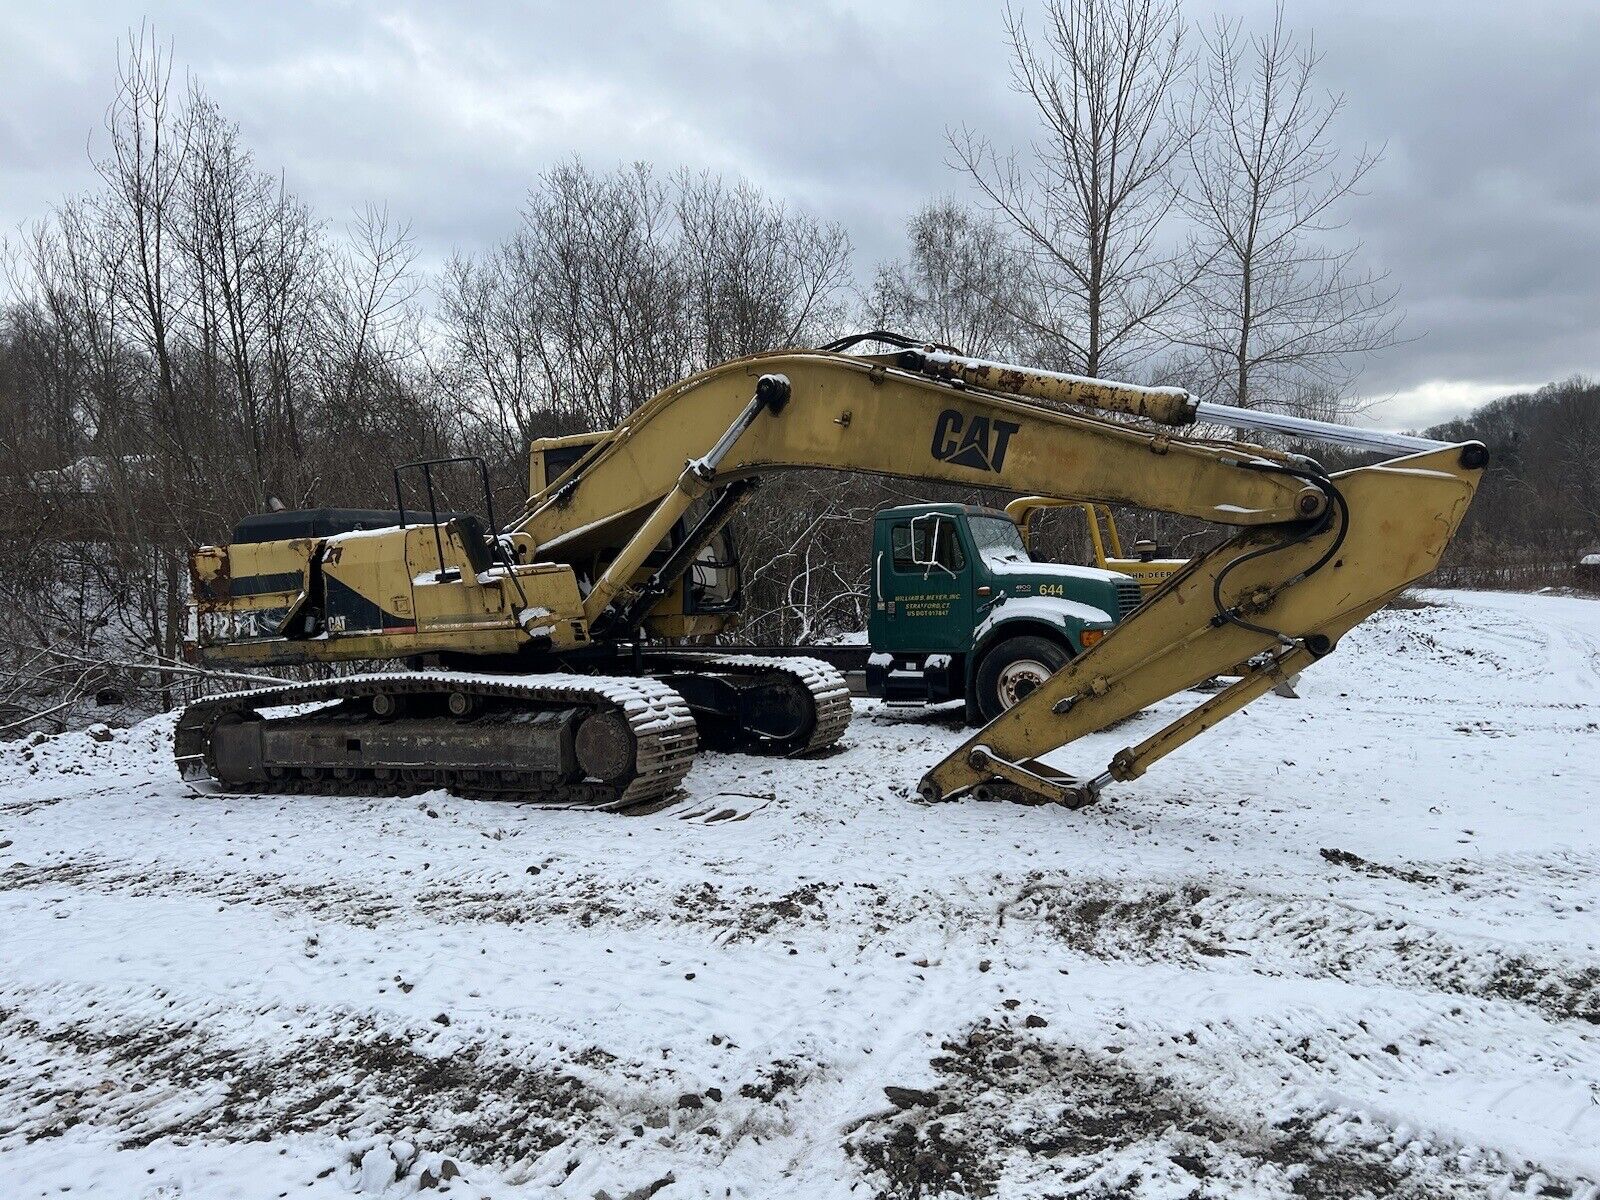 Cat 325L Excavator – Needs Work